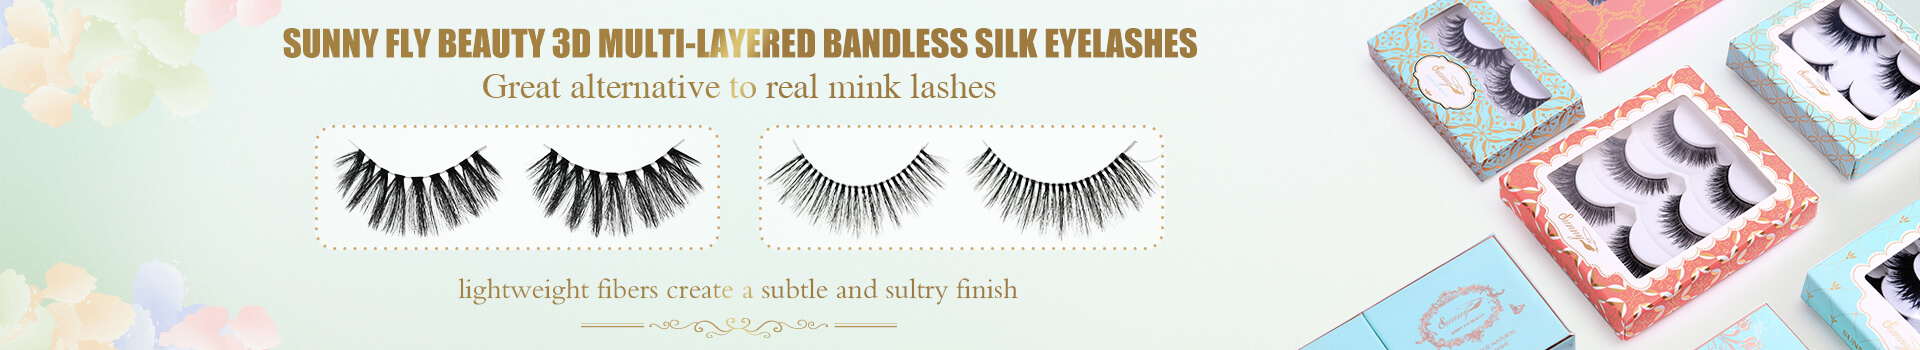 3D Multi-Layered Bandless Silk Eyelas TA17